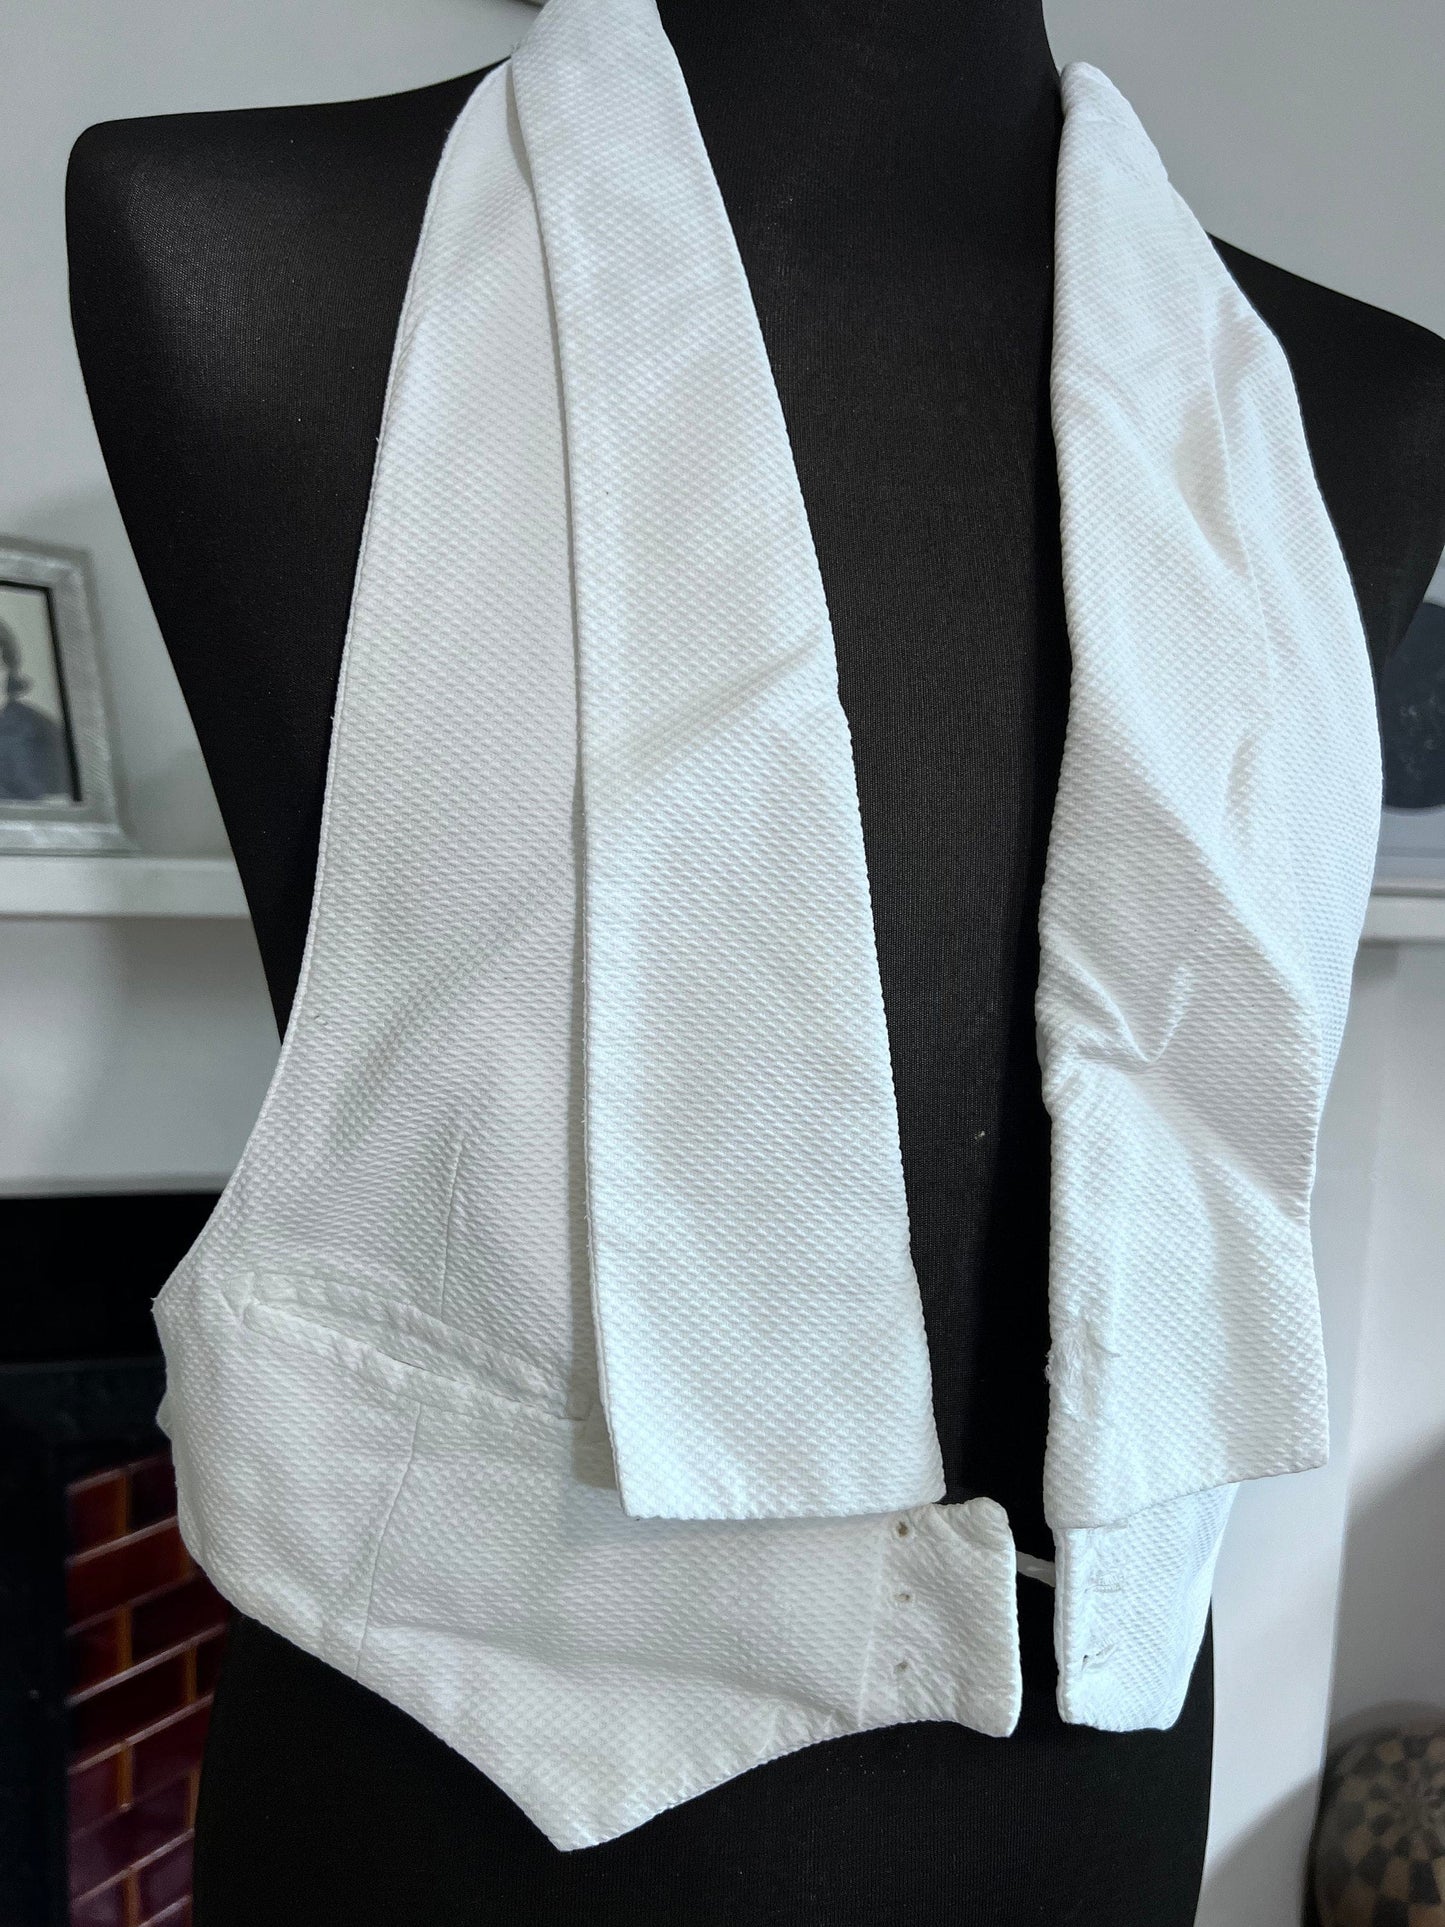 Vintage Mens White Tuxedo Waistcoat White , Suit Vest White Tie, Mens White Waffle Front Backless Tuxedo Suit Vest, elasticated back DAMAGED